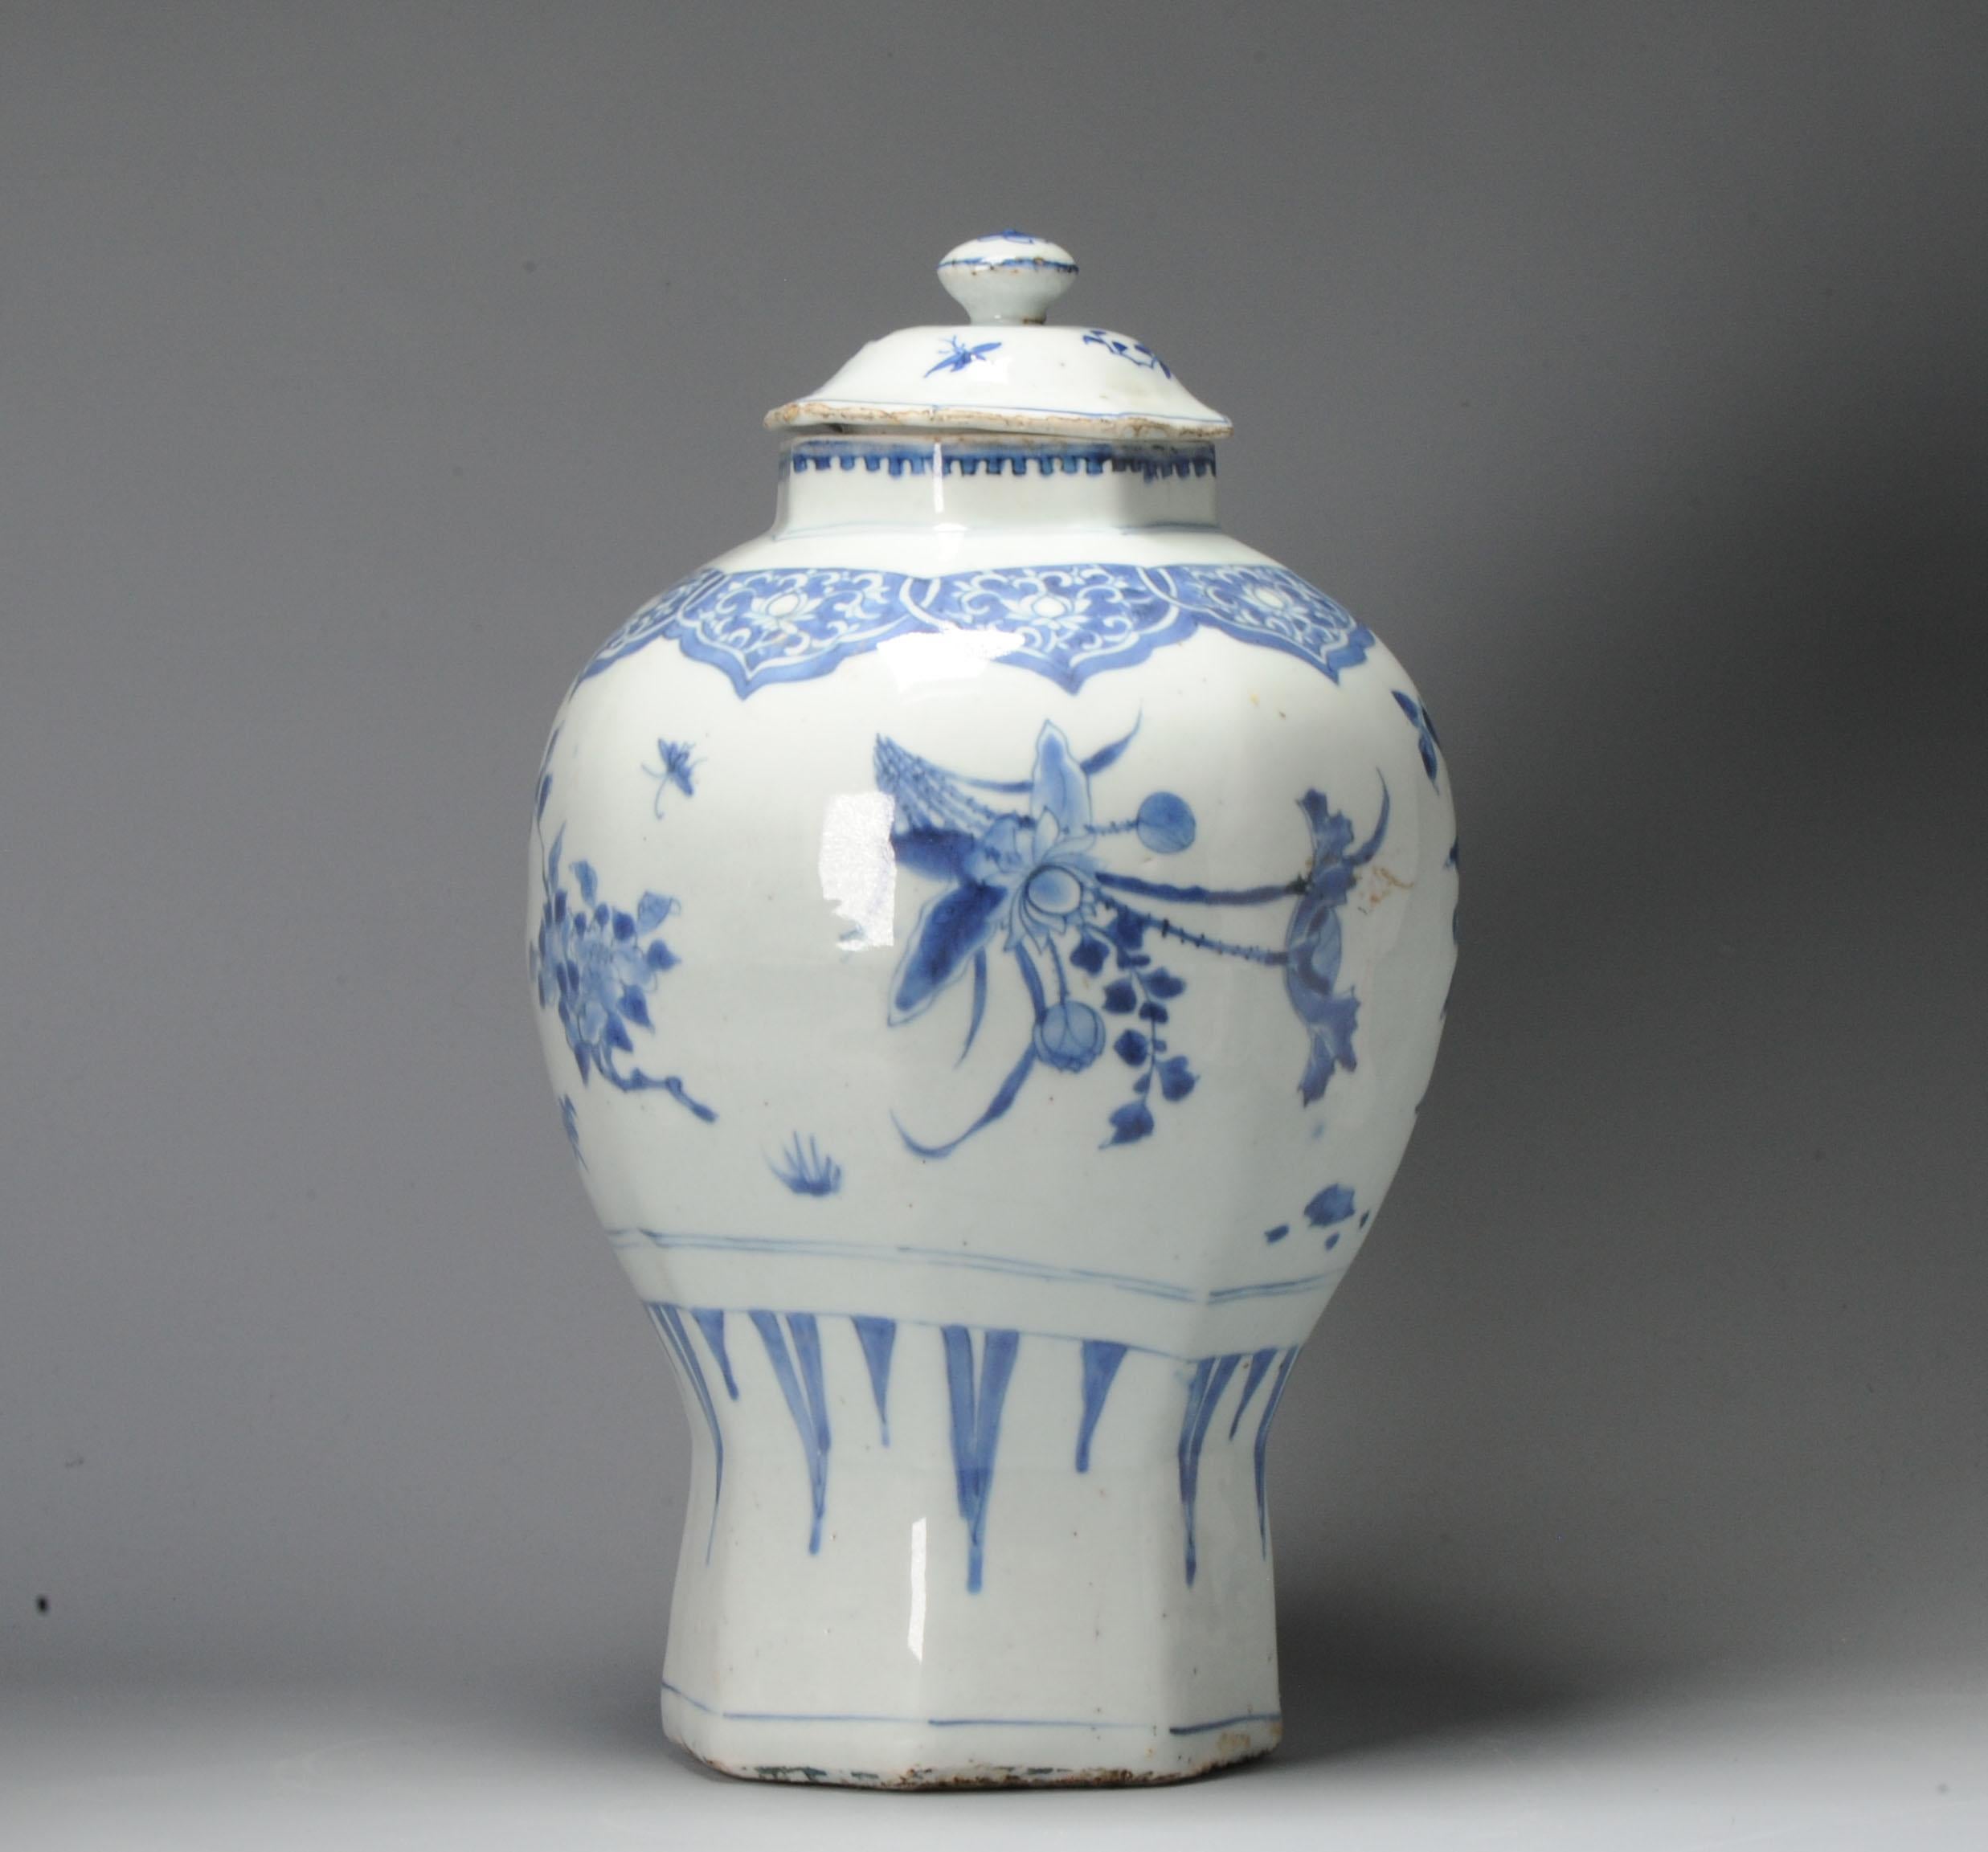 Rare Antique 17th C Transitional Chinese Porcelain Lidded Vase / Jar China For Sale 4